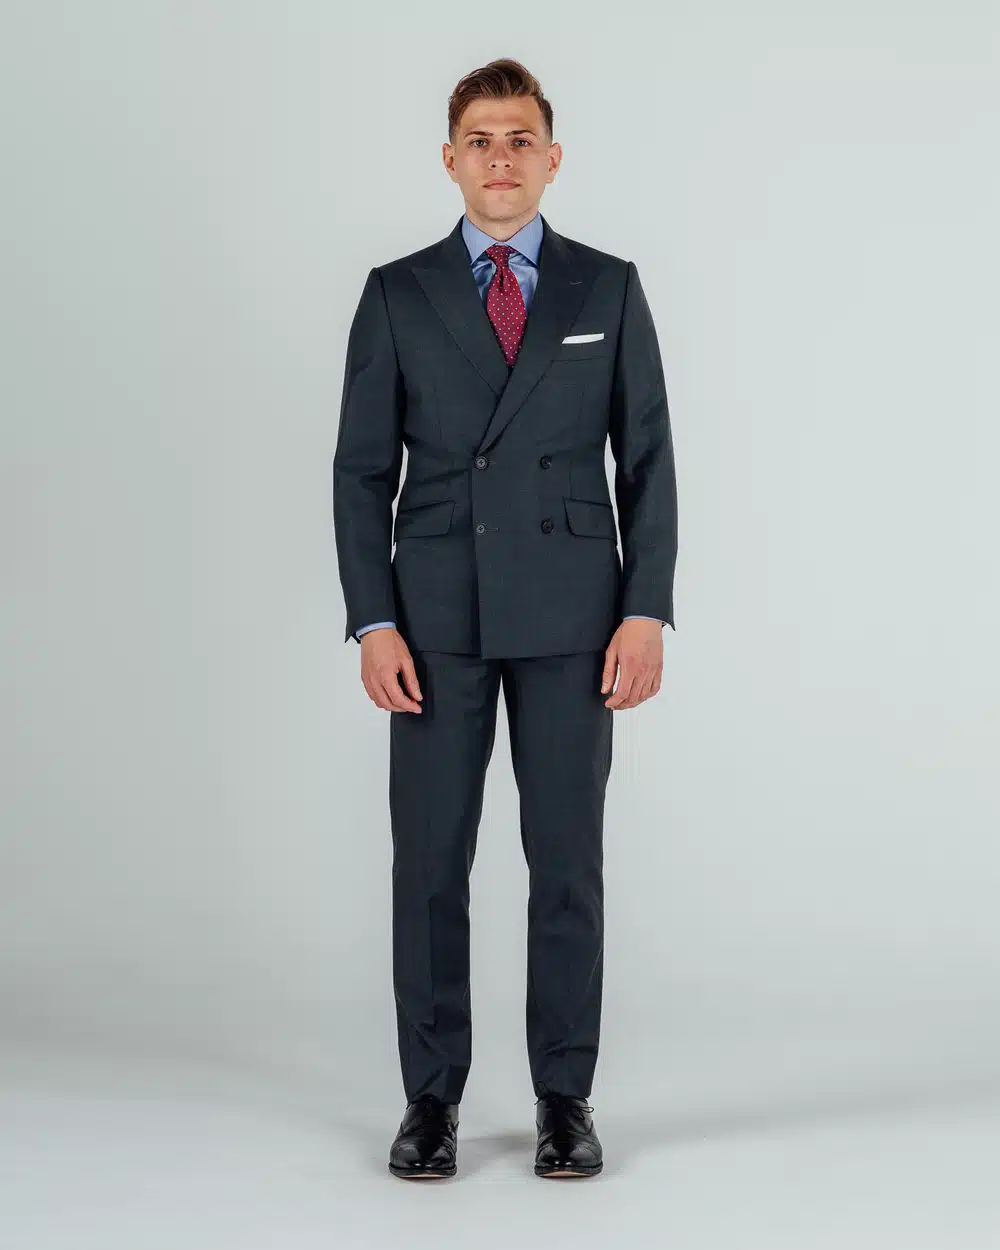 Ryan Wearing Bespoke Custom Suit